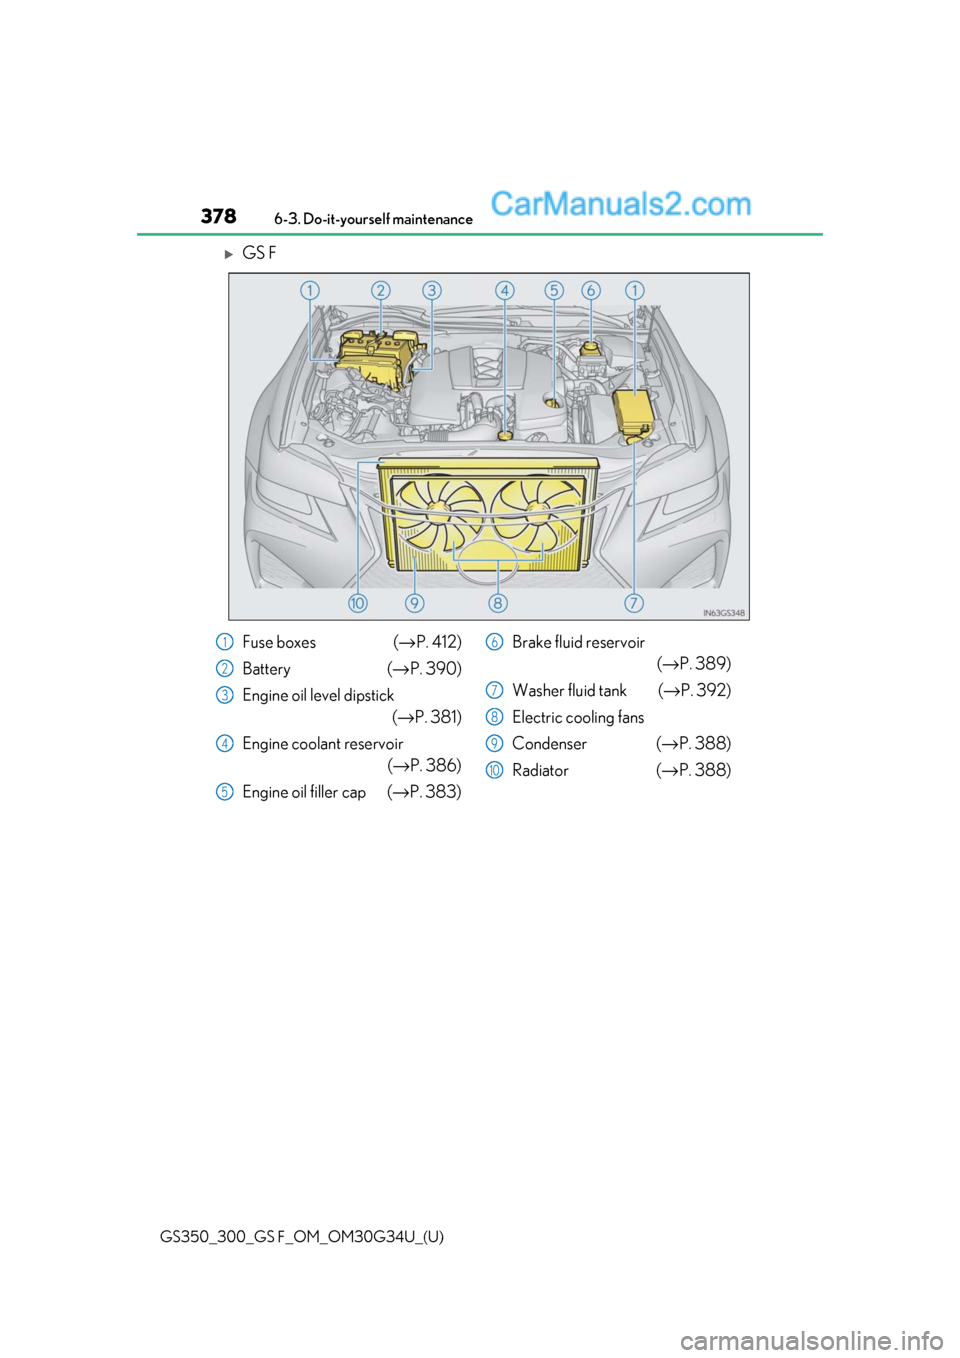 Lexus GS300 2018  s User Guide 378
GS350_300_GS F_OM_OM30G34U_(U)6-3. Do-it-yourself maintenance
GS F
Fuse boxes (→
P. 412)
Battery ( →P. 390)
Engine oil level dipstick (→P. 381)
Engine coolant reservoir (→P. 386)
Engine